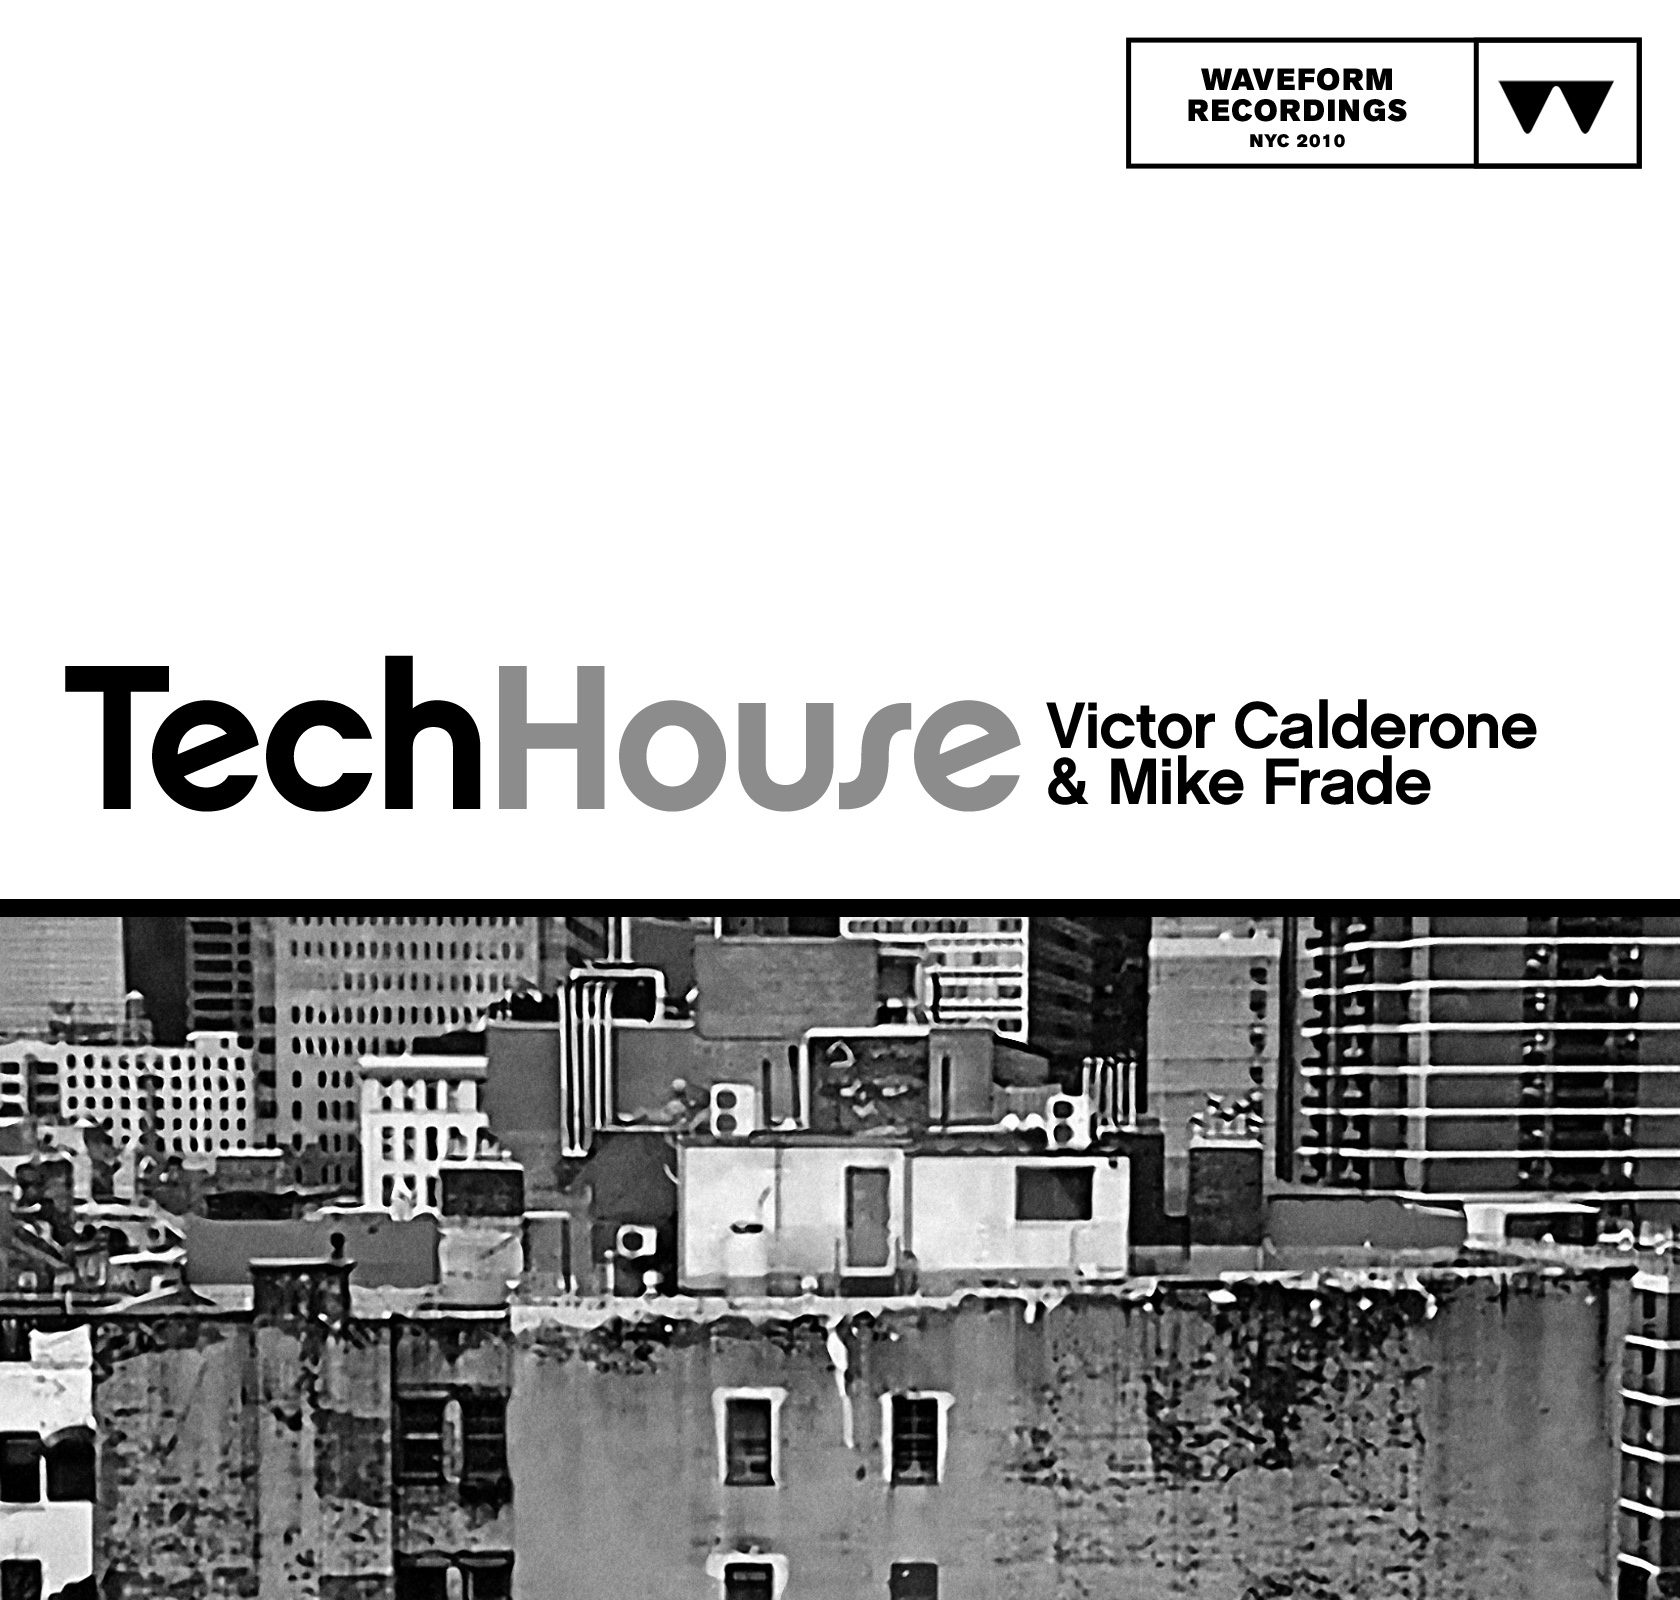 Waveform Recordings - Victor Calderone & Mike Frade - Tech House